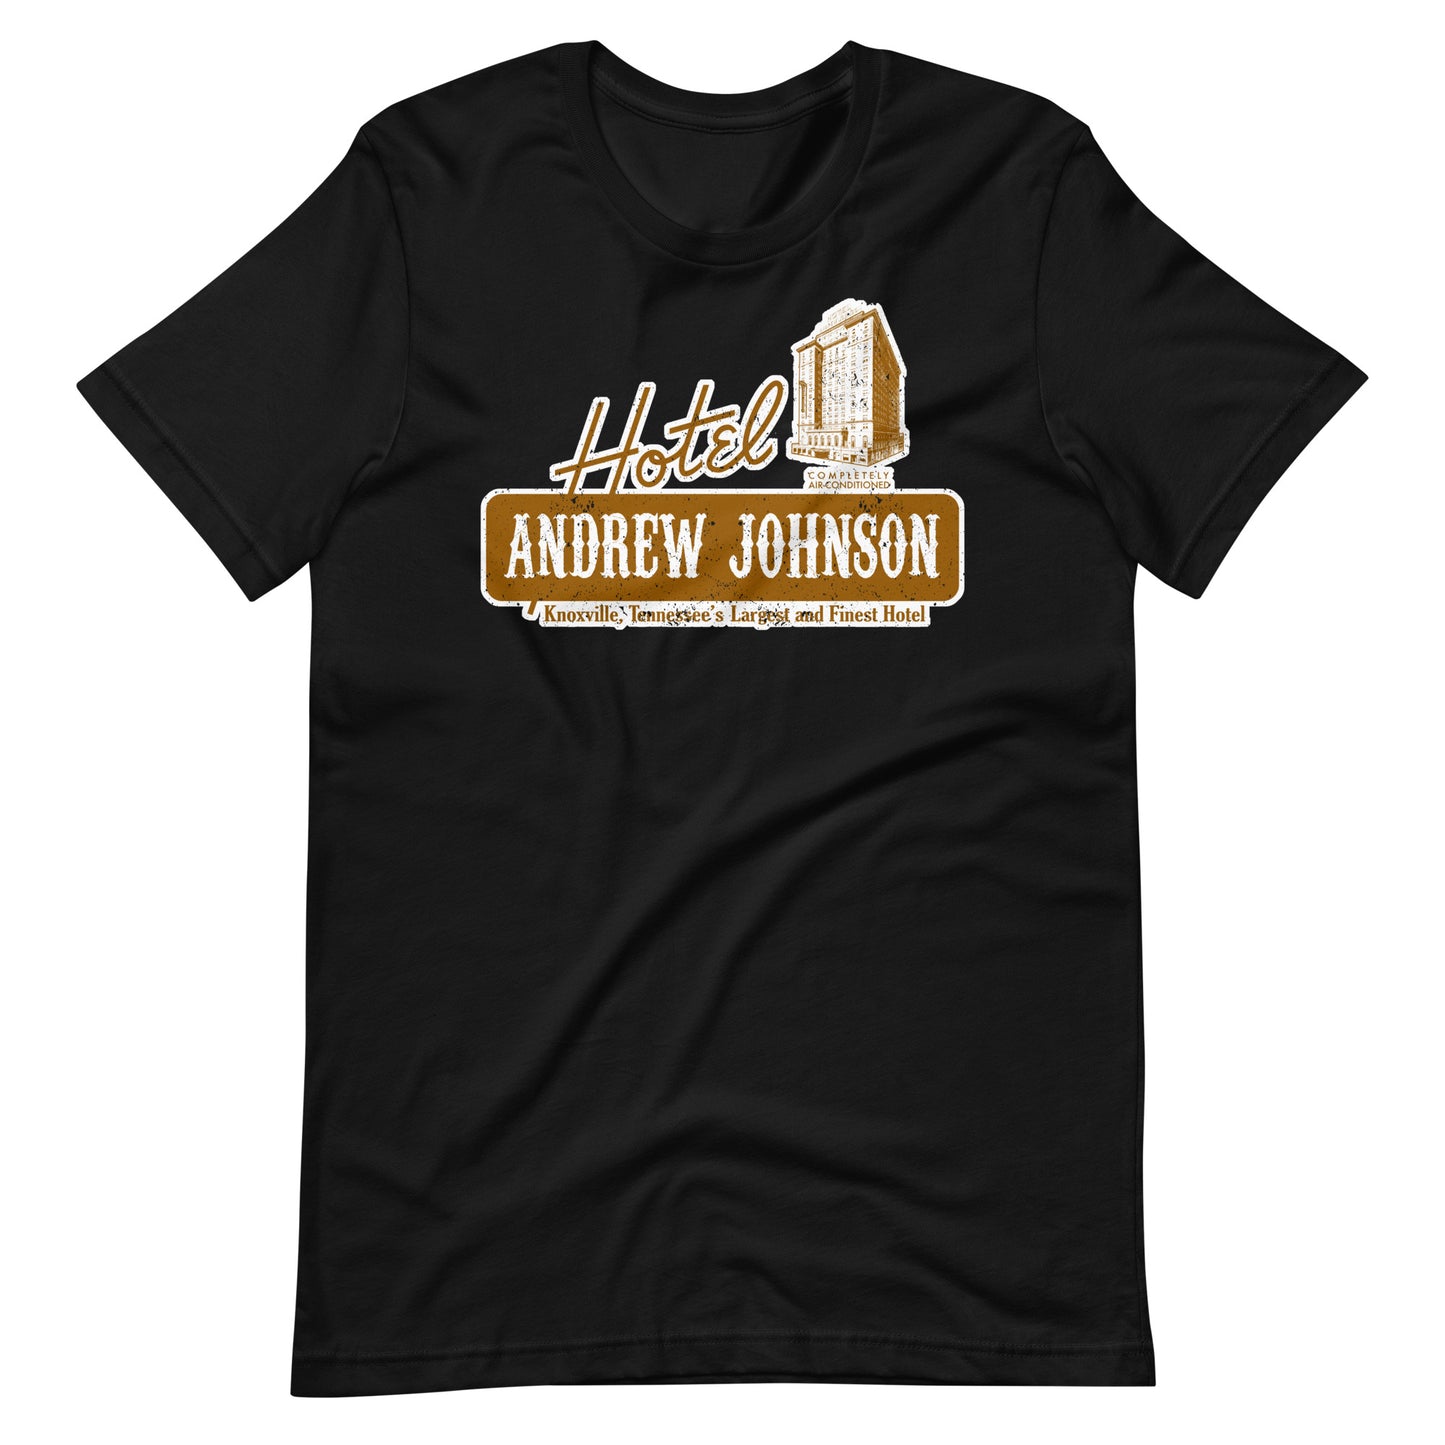 Hotel Andrew Johnson Unisex T-shirt in Antique Orange  by RICK BALDWIN